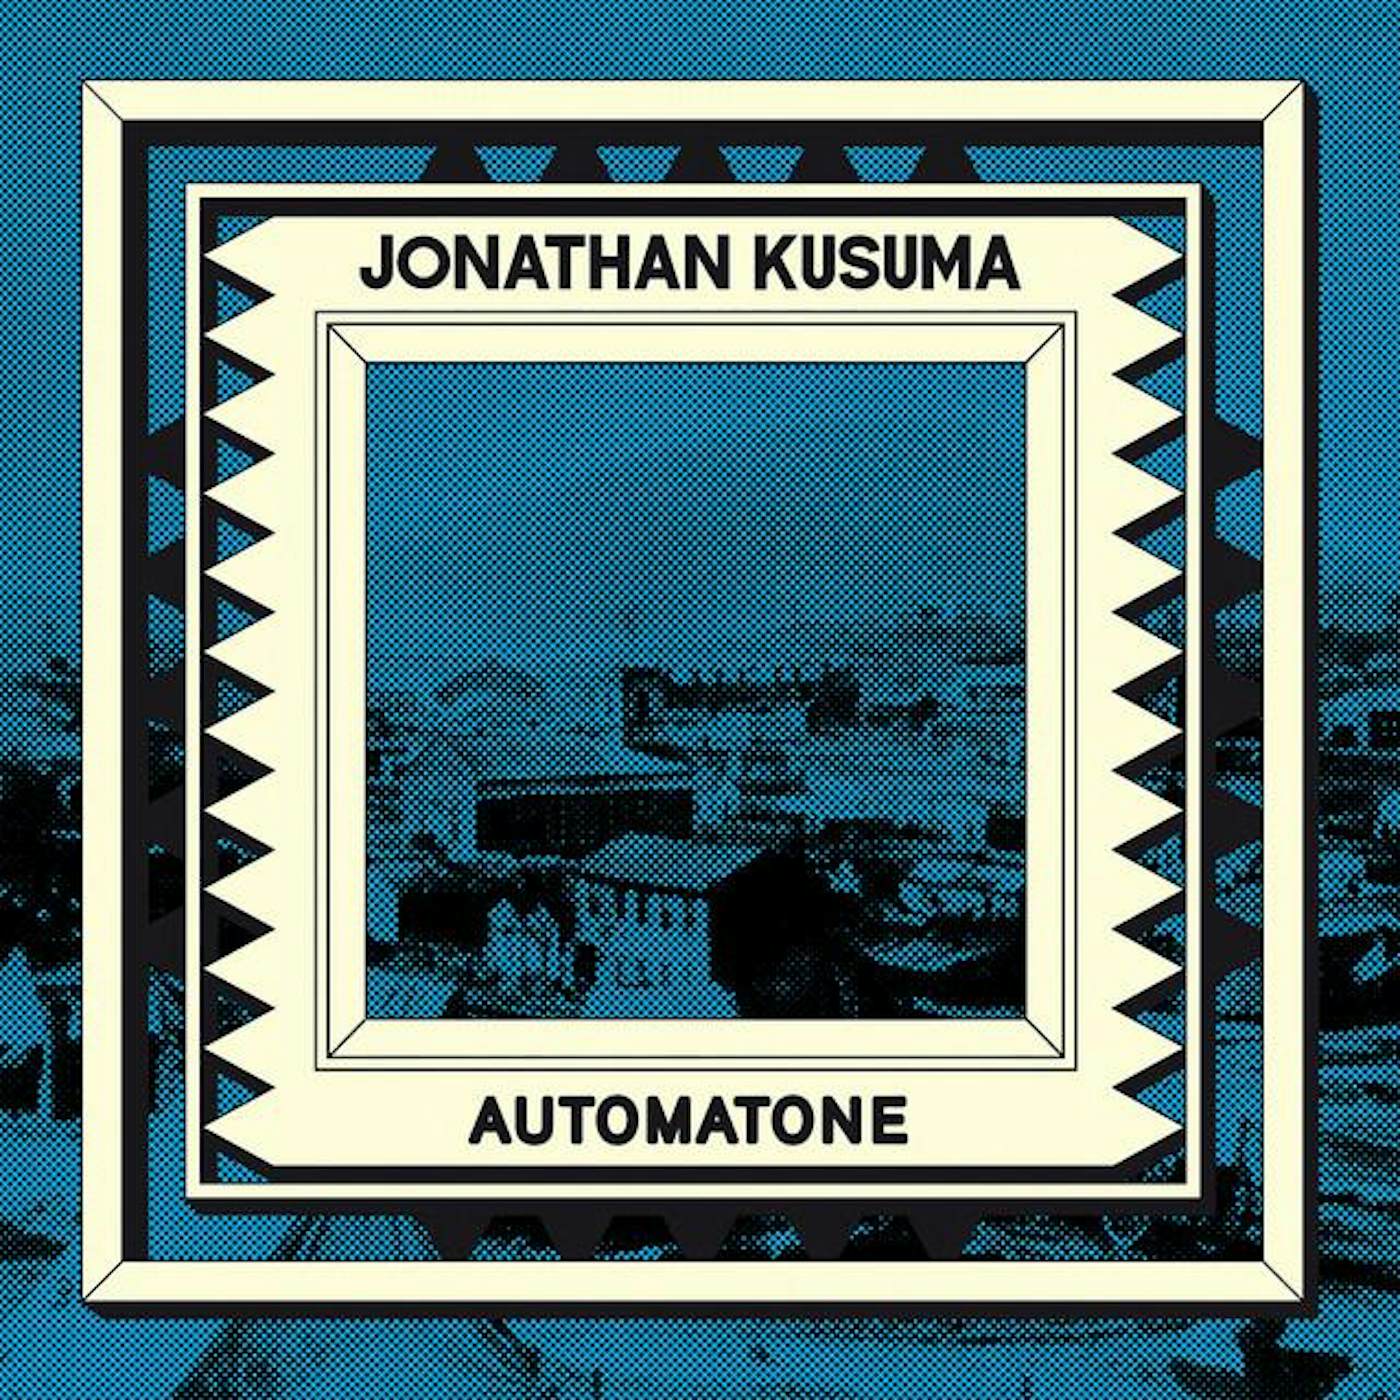 Jonathan Kusuma